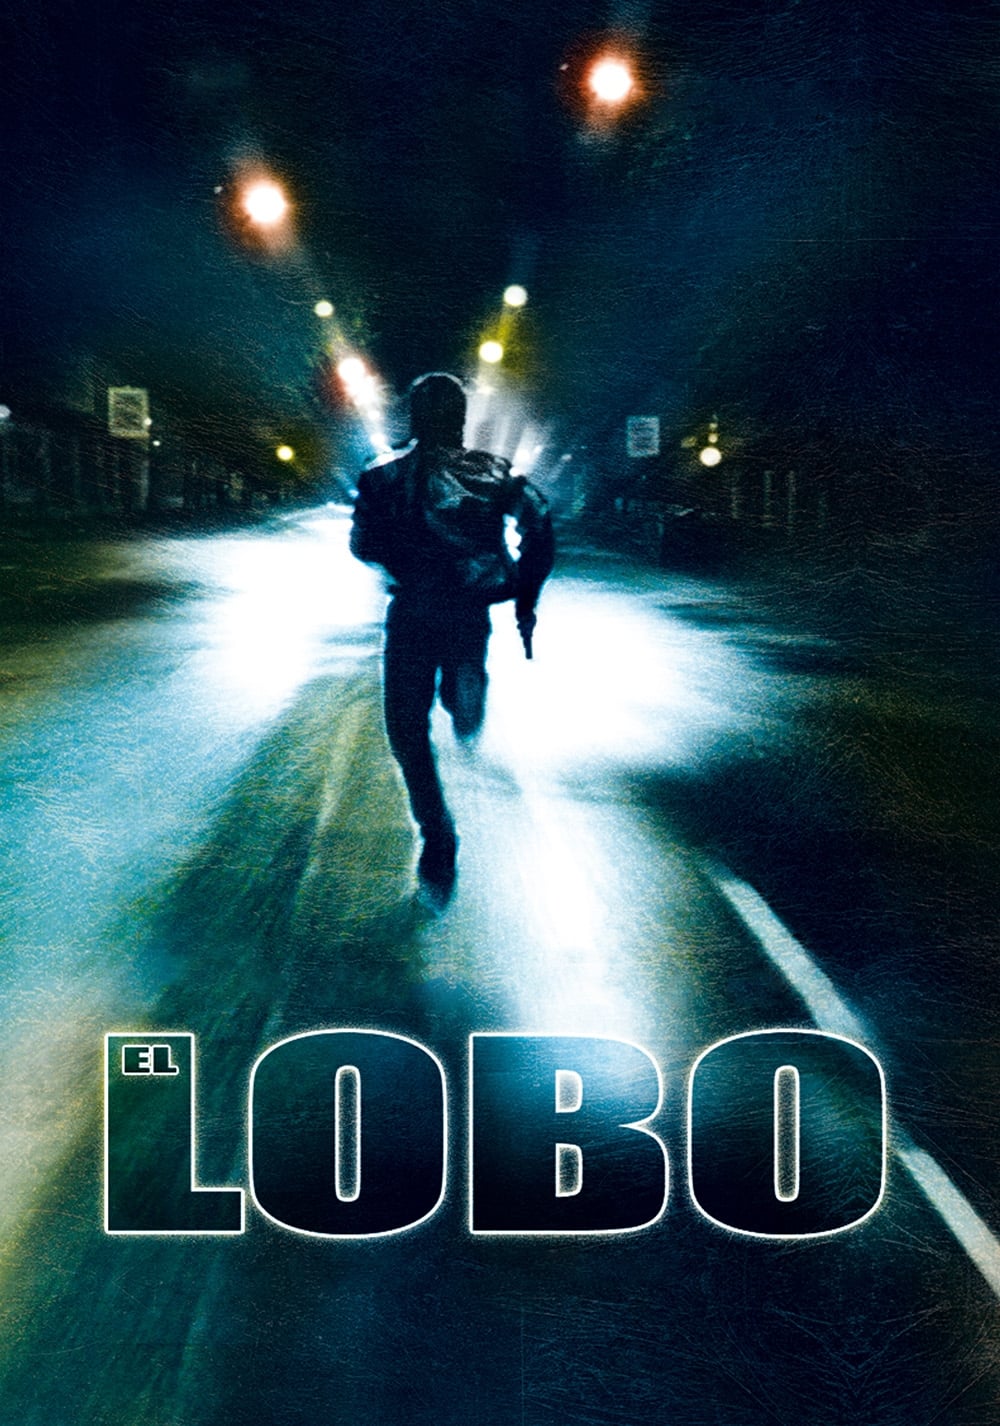 El Lobo – The wolf [Sub-ITA] (2004)